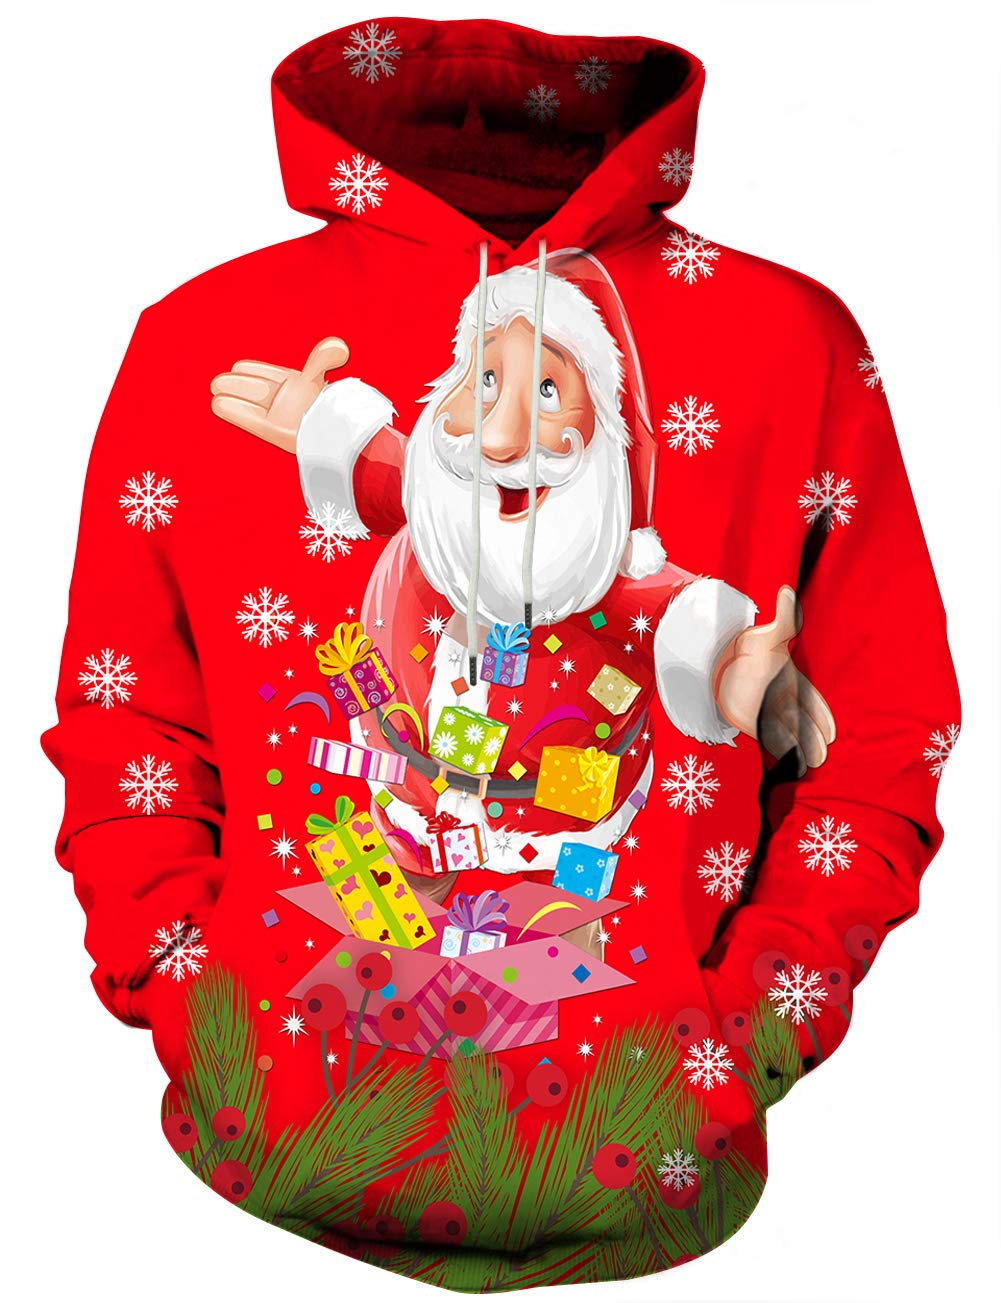 C COABALLA Winter Scenes,Mens Print 3D Fashion Hoodies Sweatshirts Xmas Gift XS878 S 